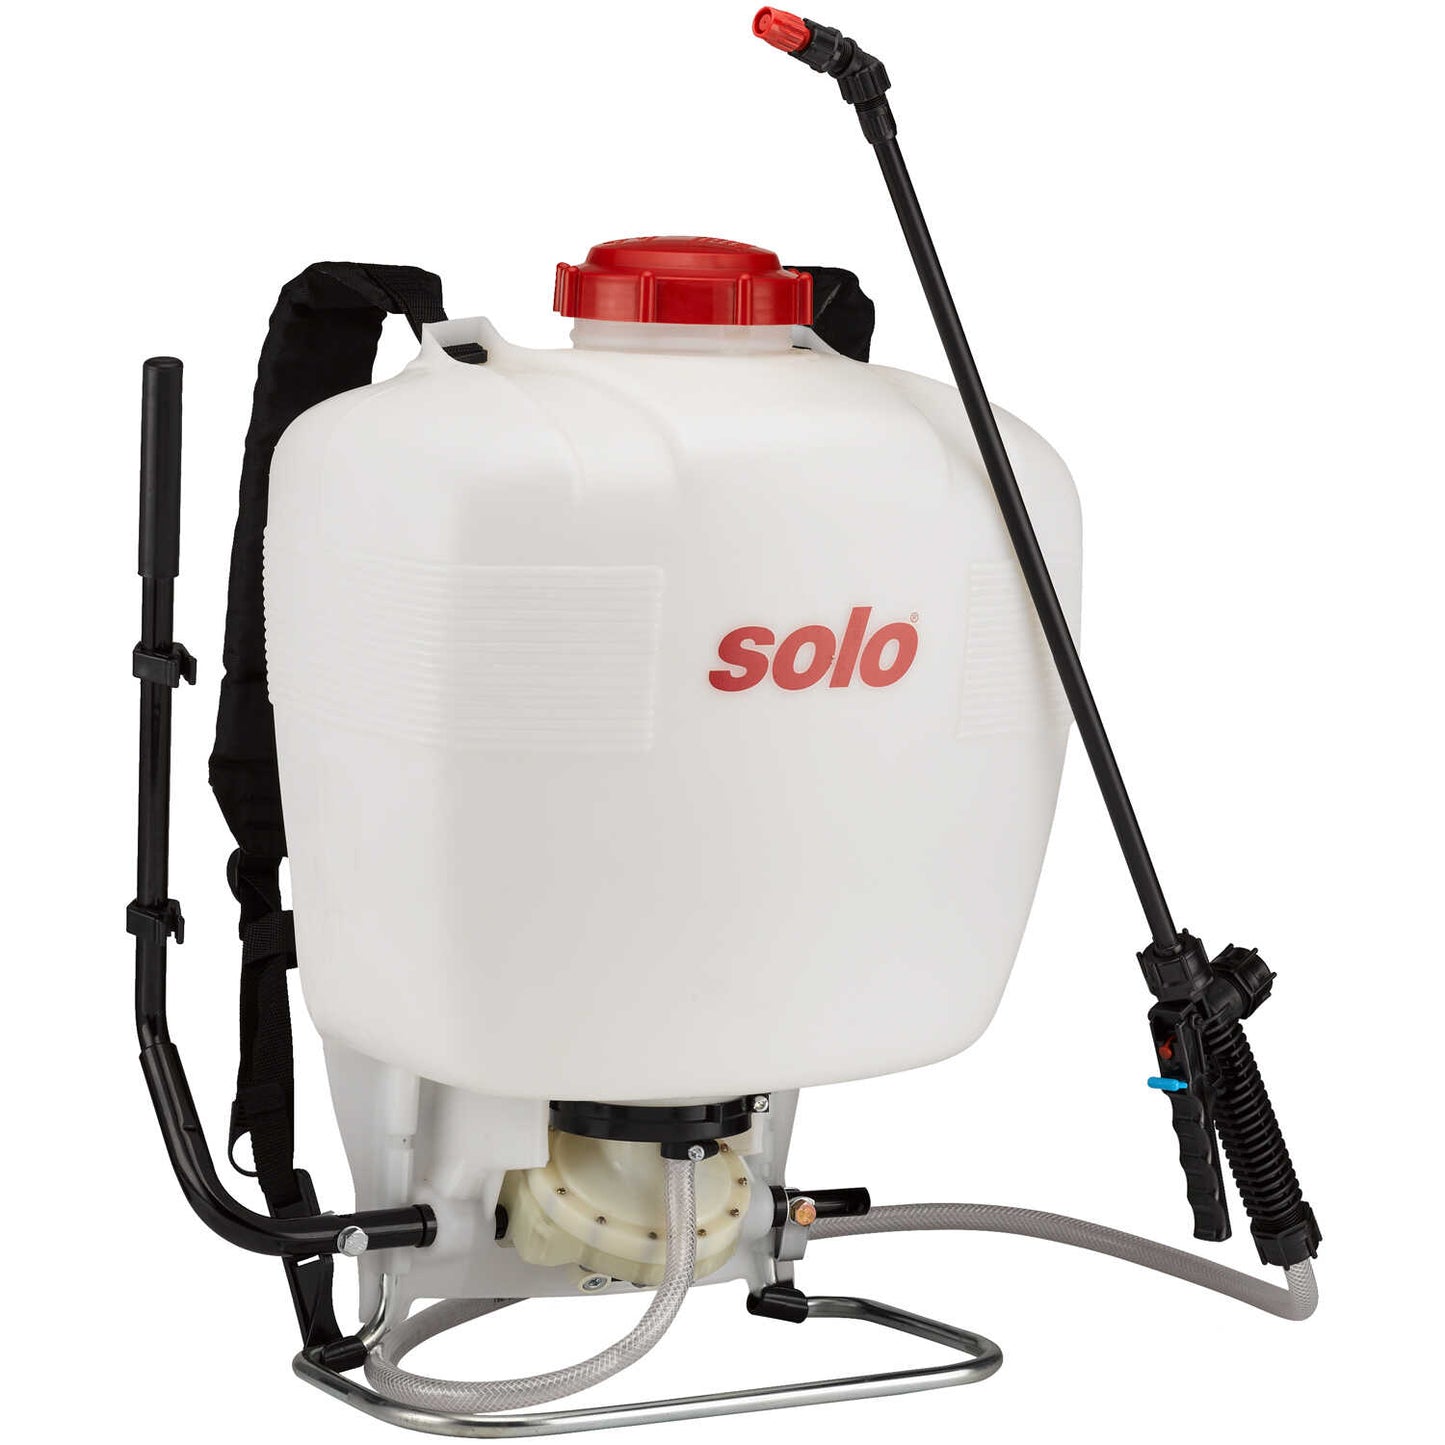 Solo Backpack Sprayer Model 485 Diaphragm Pump, 5 Gal.